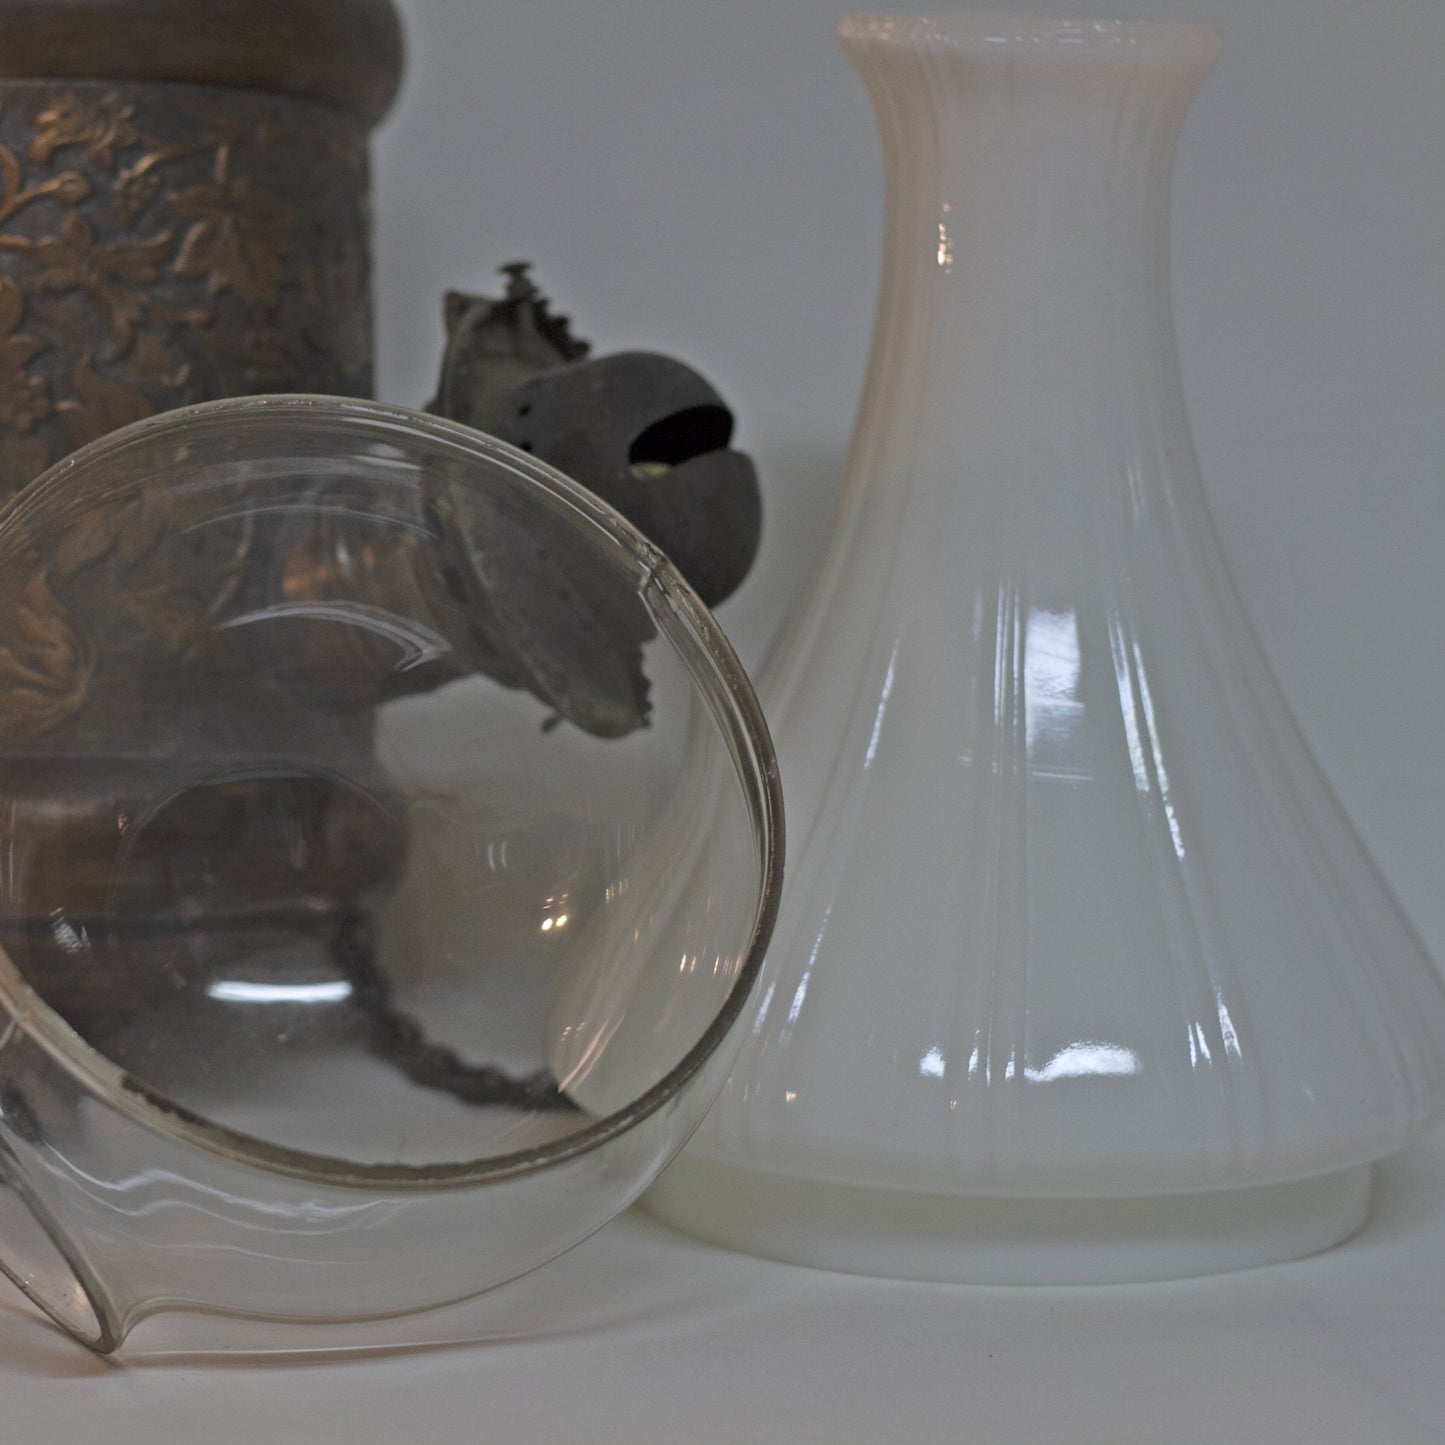 The Angle Lamp Company DOUBLE BURNER HANGING LAMP Circa Late 1800s